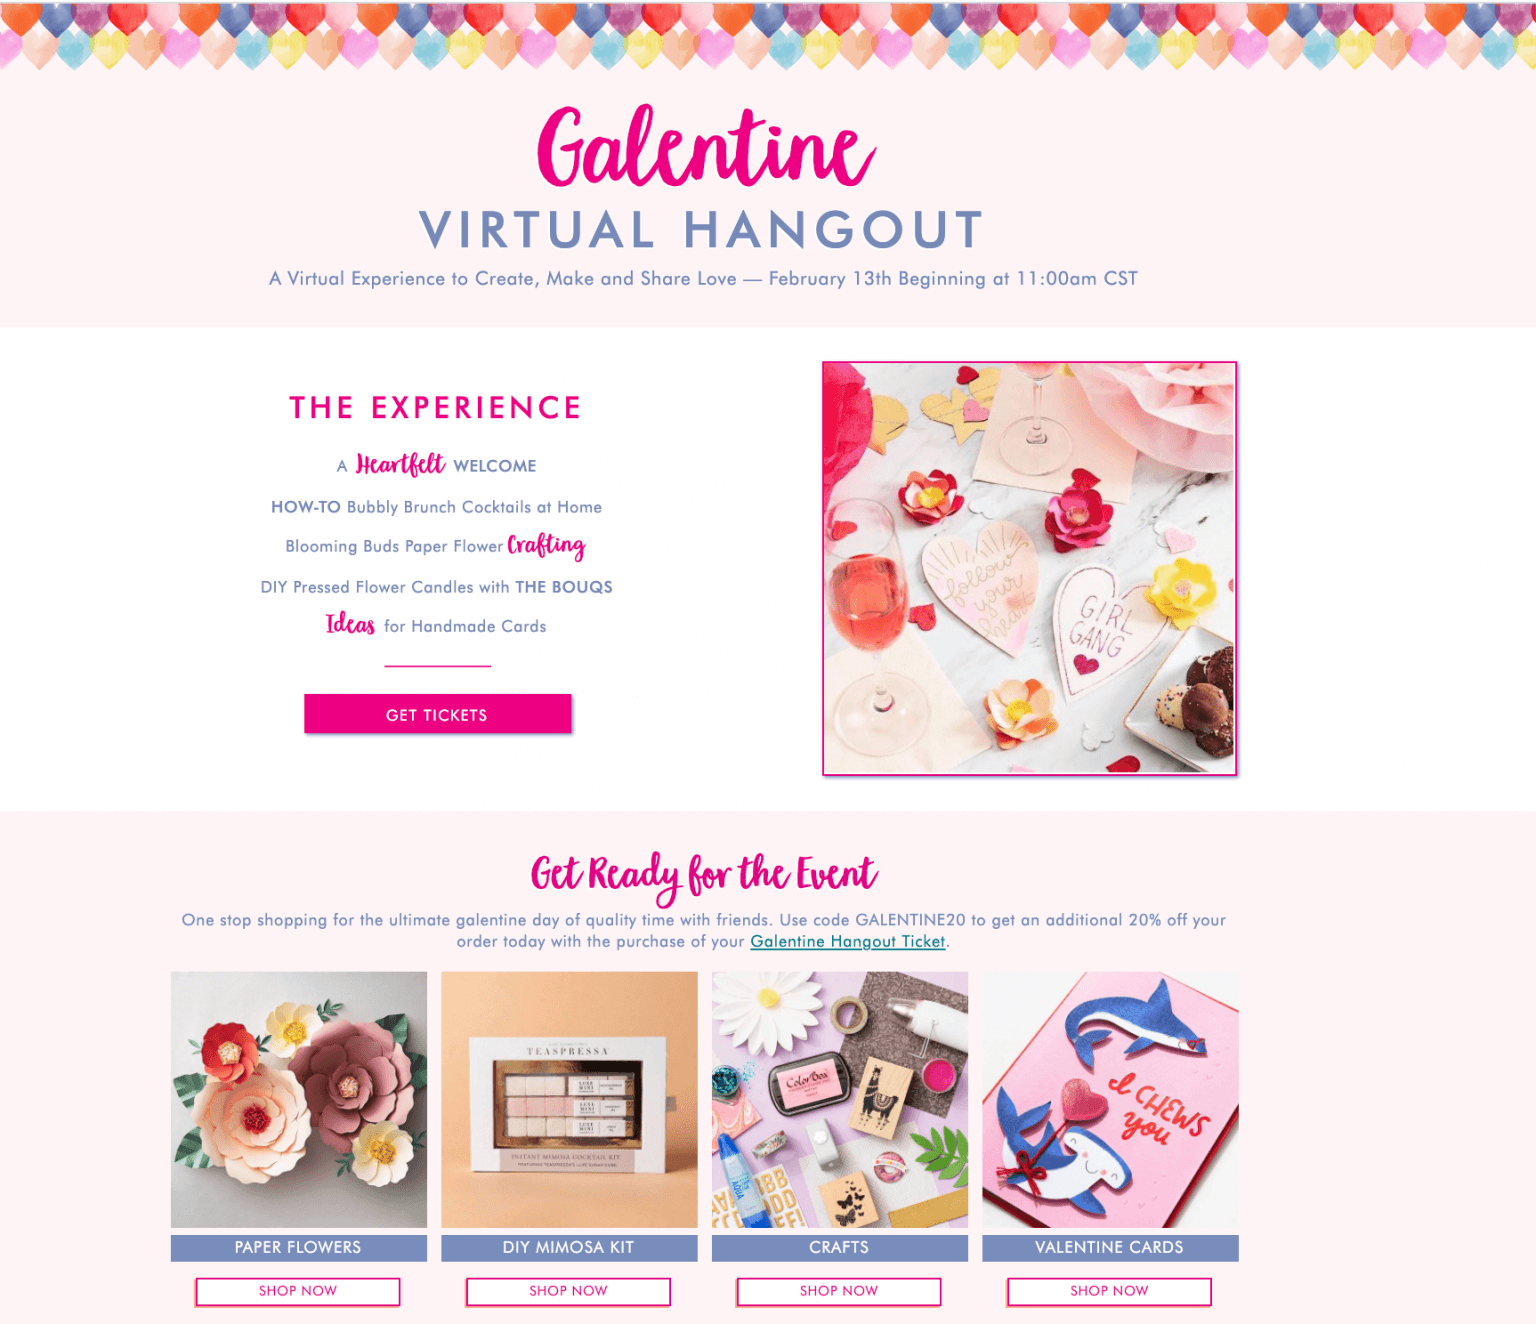 Galentine's Day virtual hangout